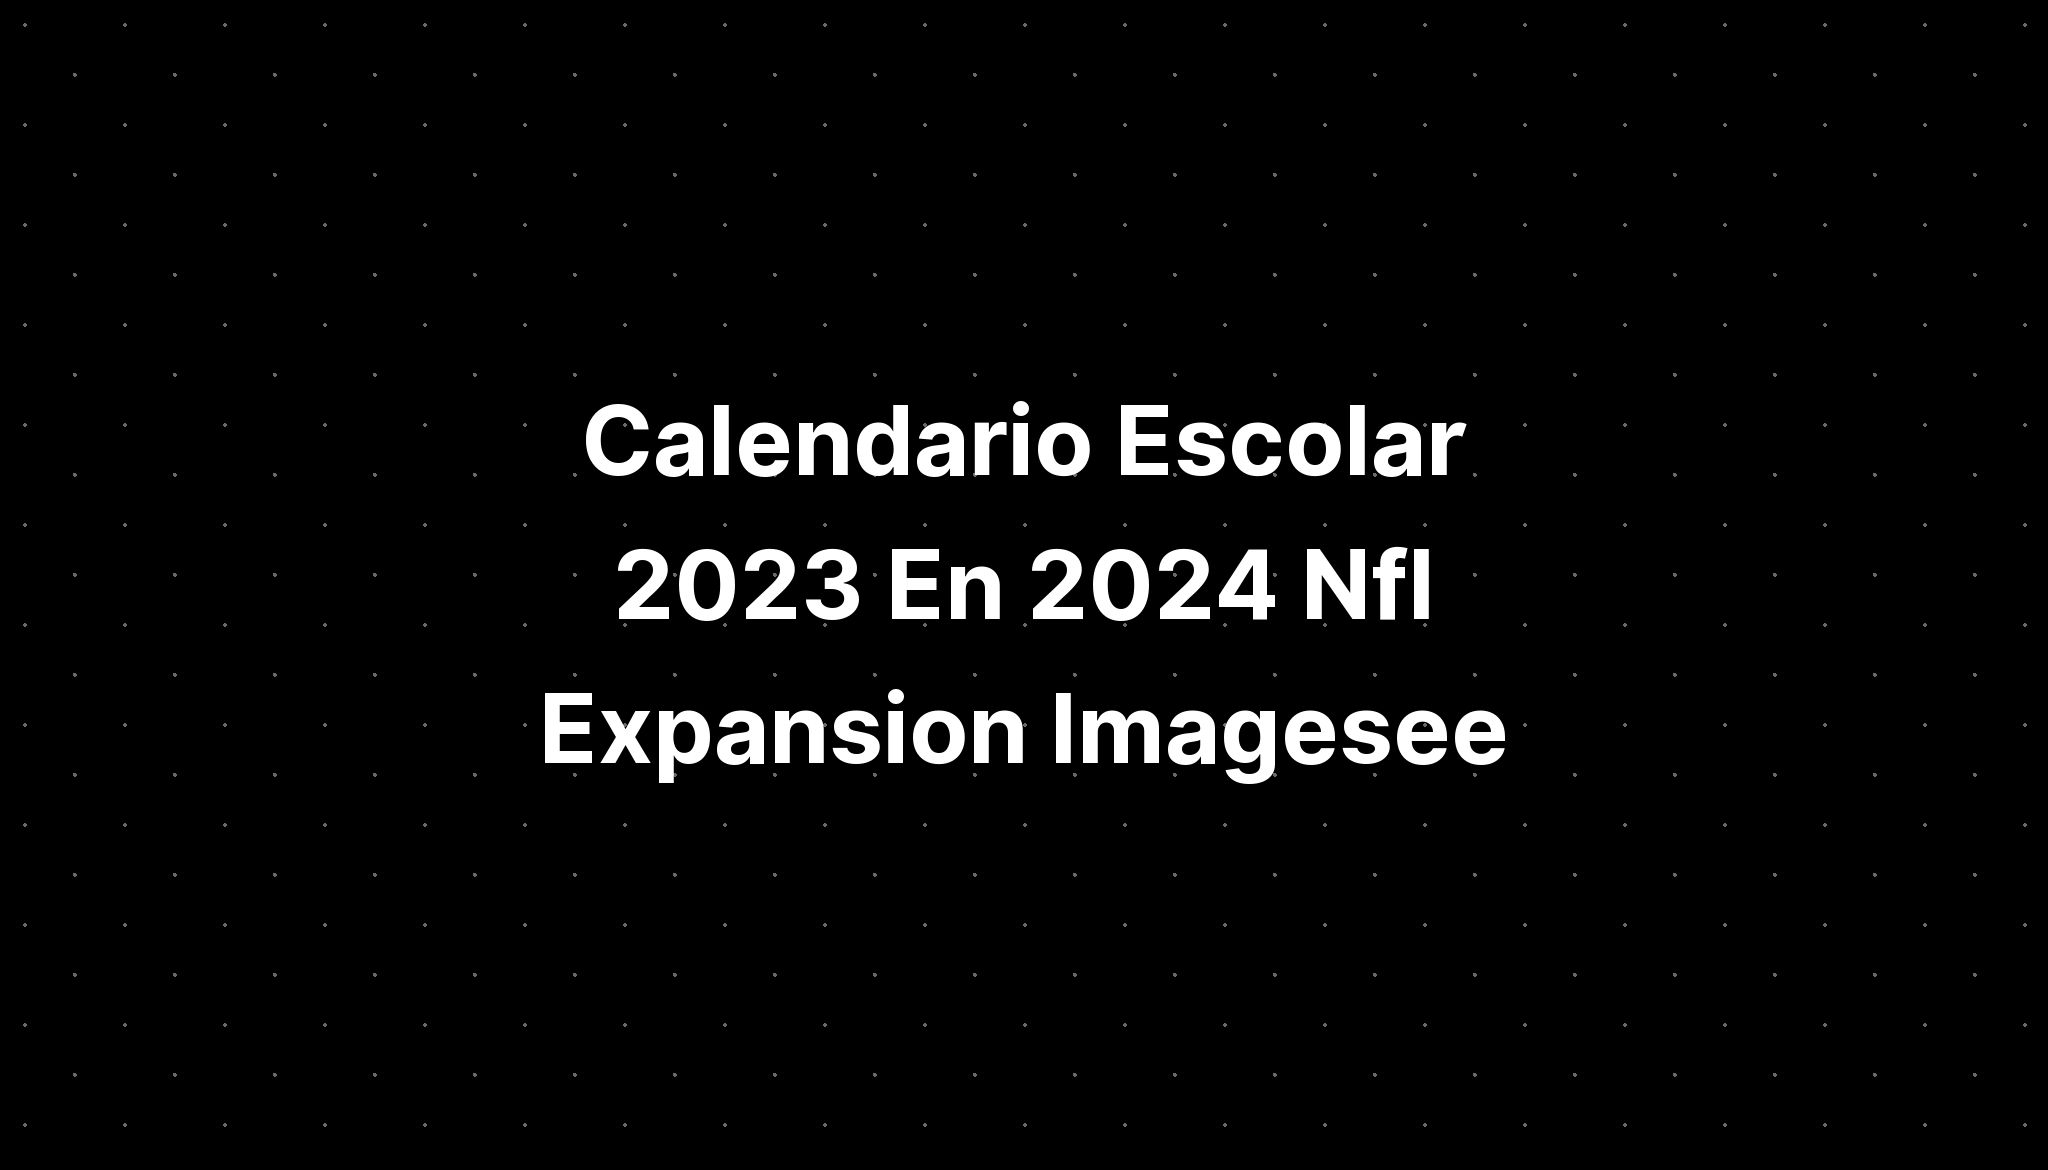 Calendario Escolar 2023 En 2024 Nfl Expansion Imagesee IMAGESEE